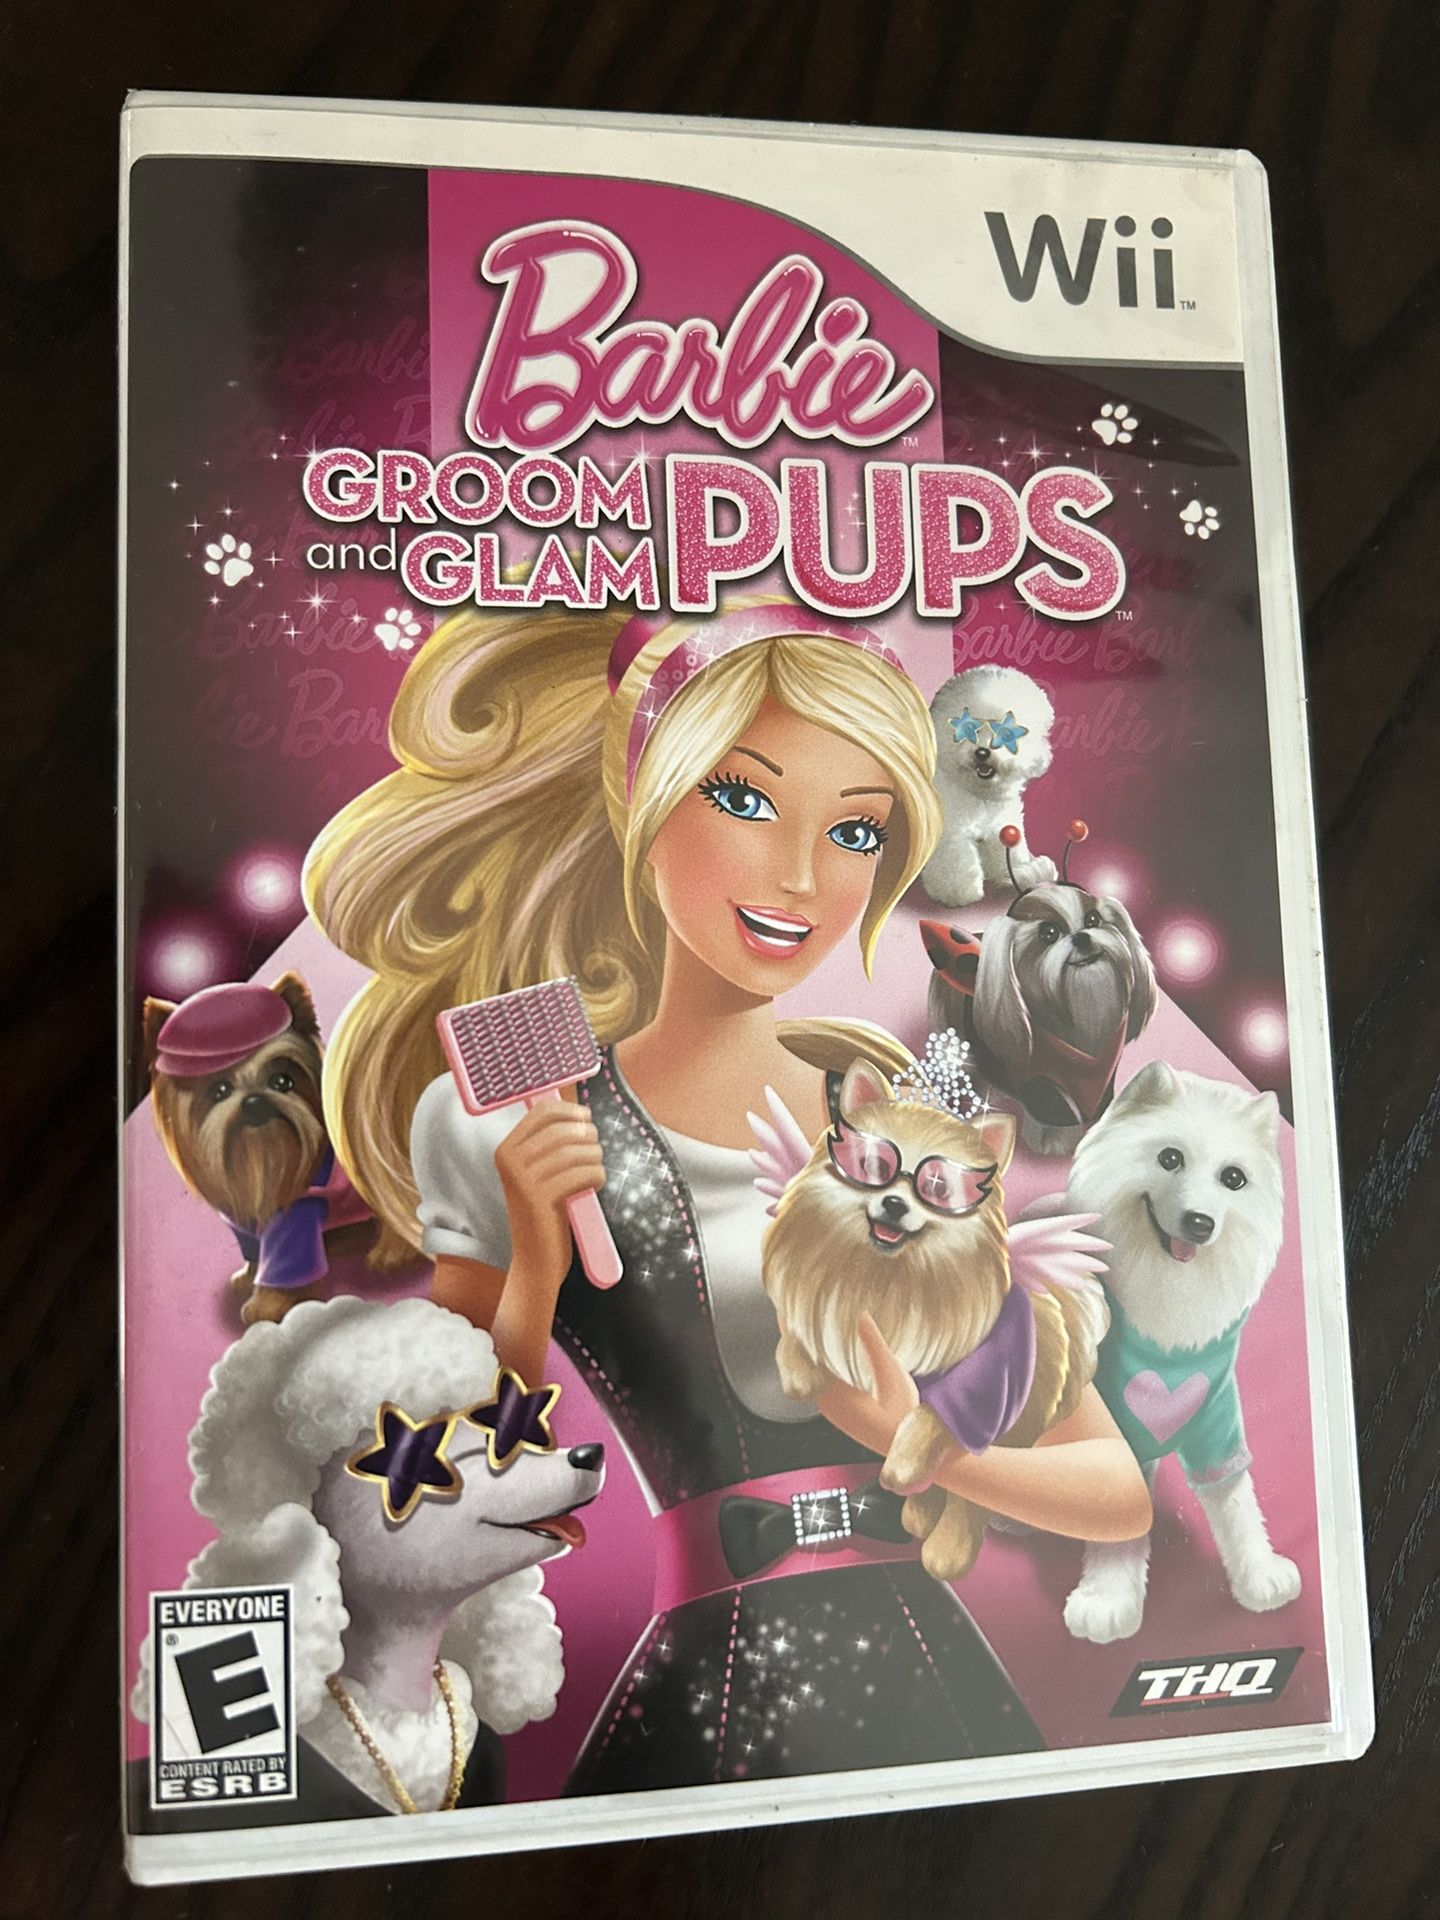 Gummi Serena Interaktion Barbie: Groom and Glam Pups (Nintendo Wii, 2010) for Sale in Orlando, FL -  OfferUp